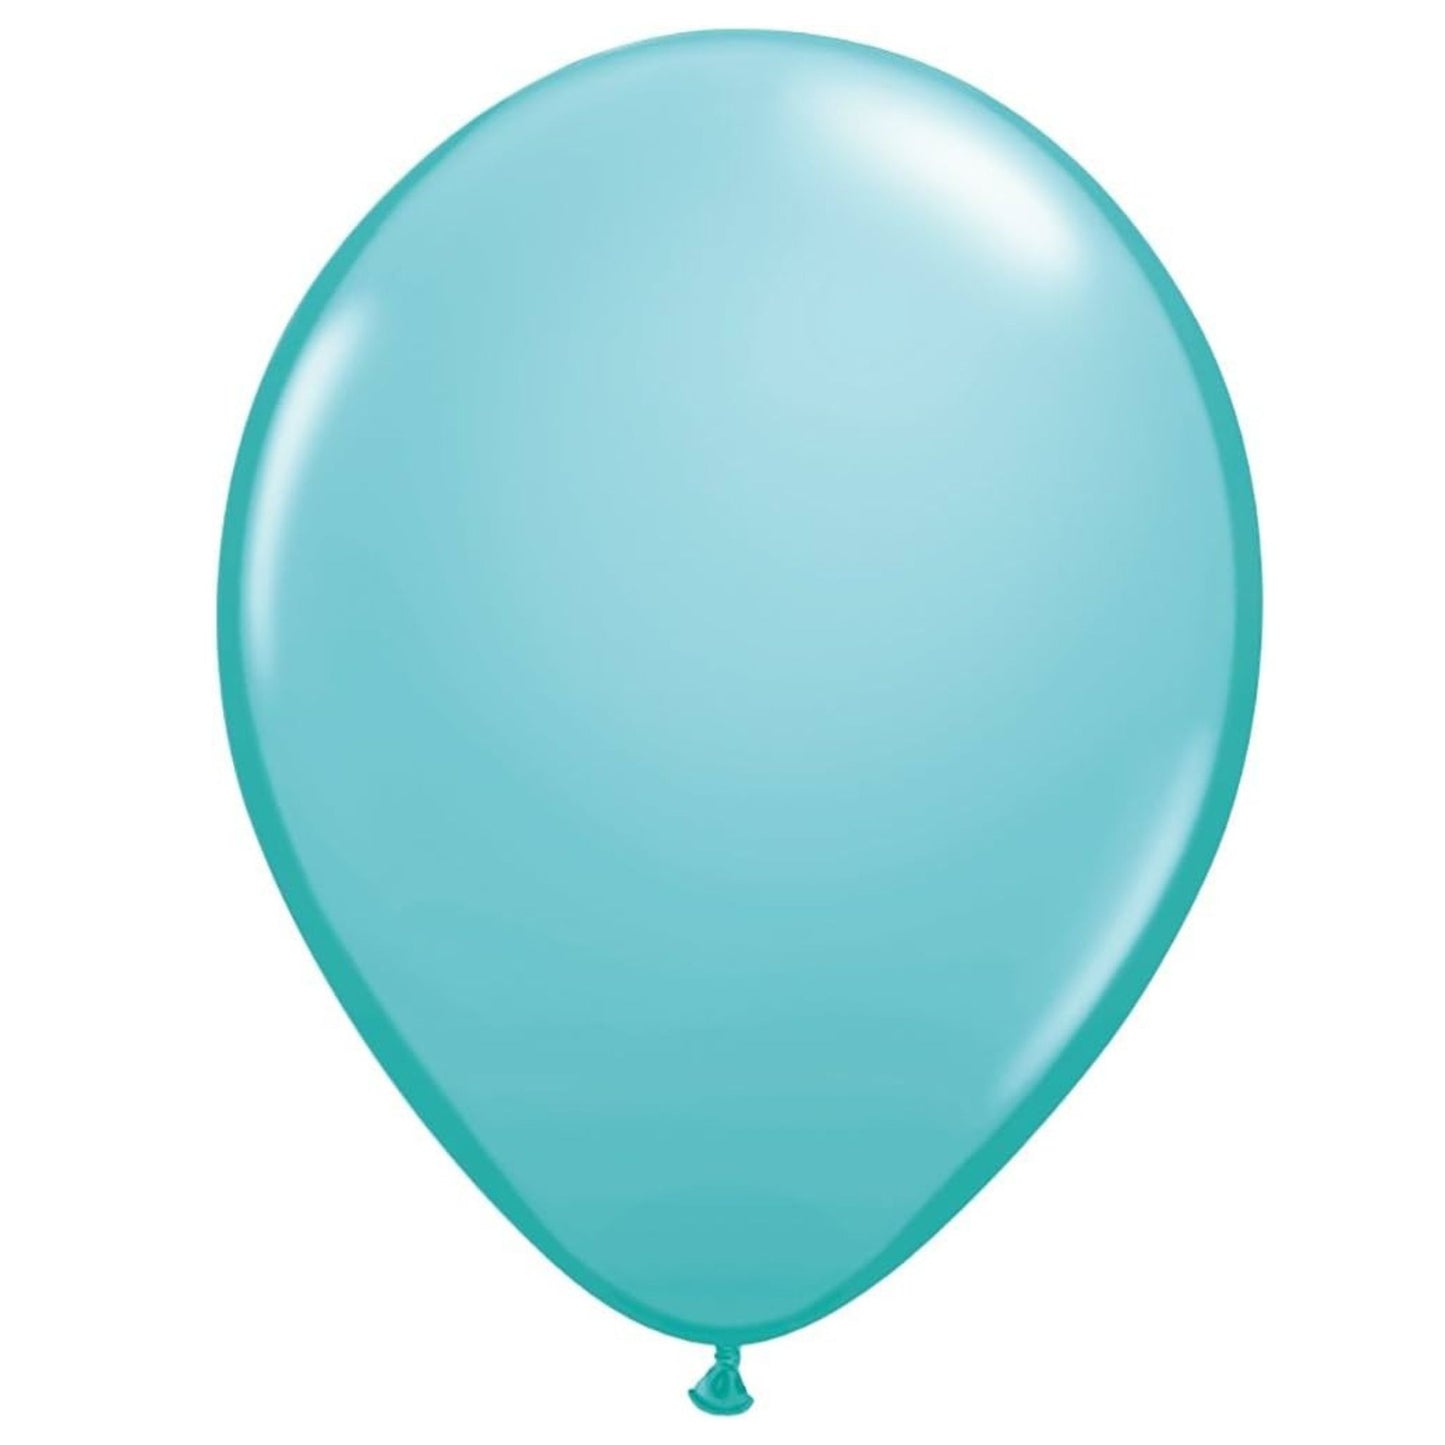 11 inch helium filled Caribbean Blue Latex balloon